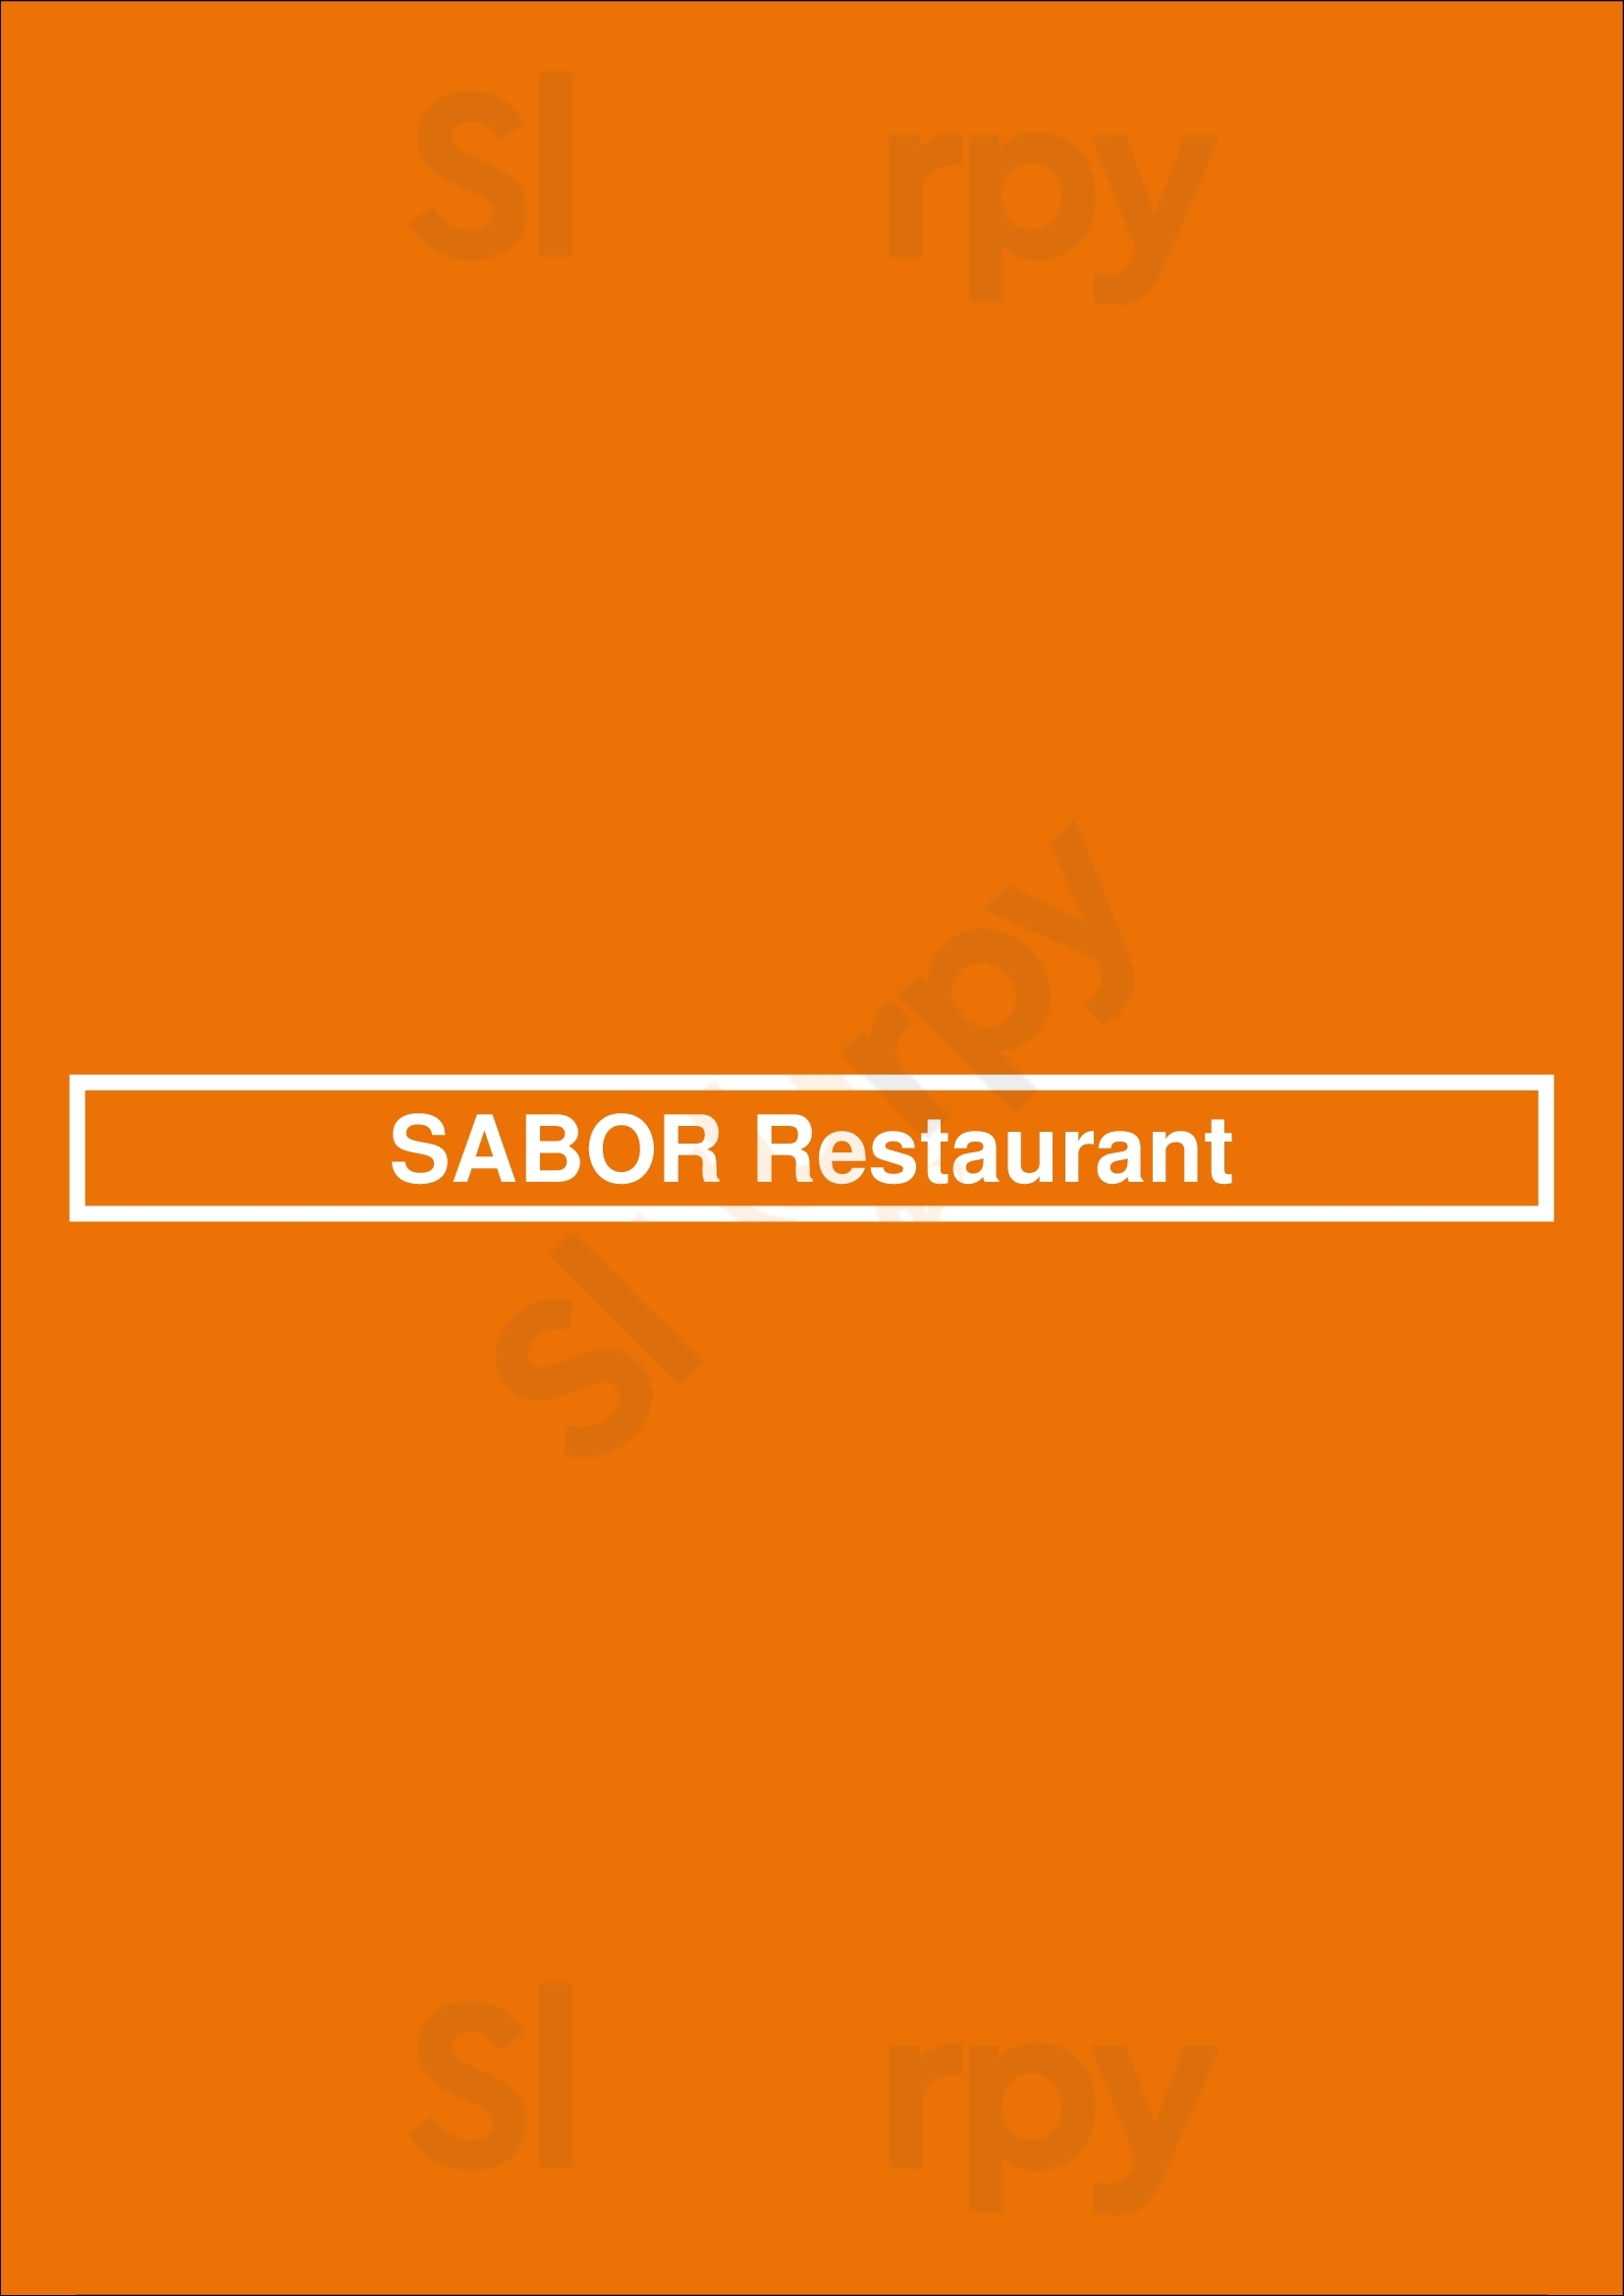 Sabor Restaurant Edmonton Menu - 1